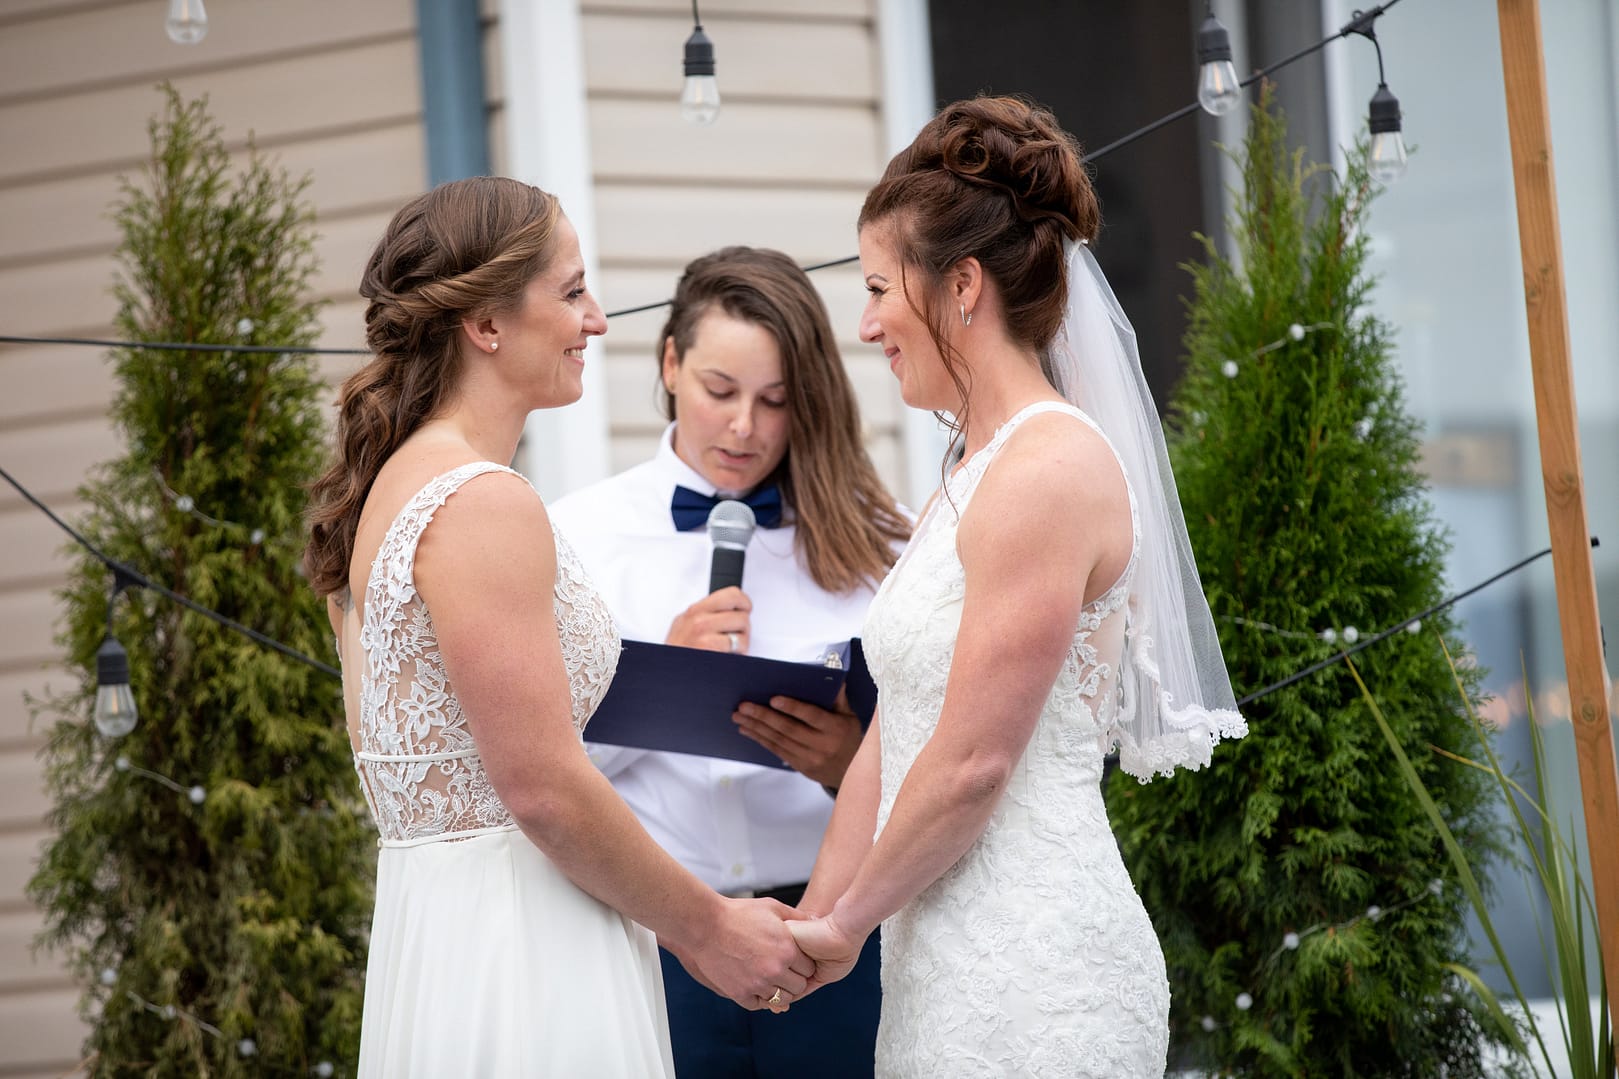 Lesbian brides get married